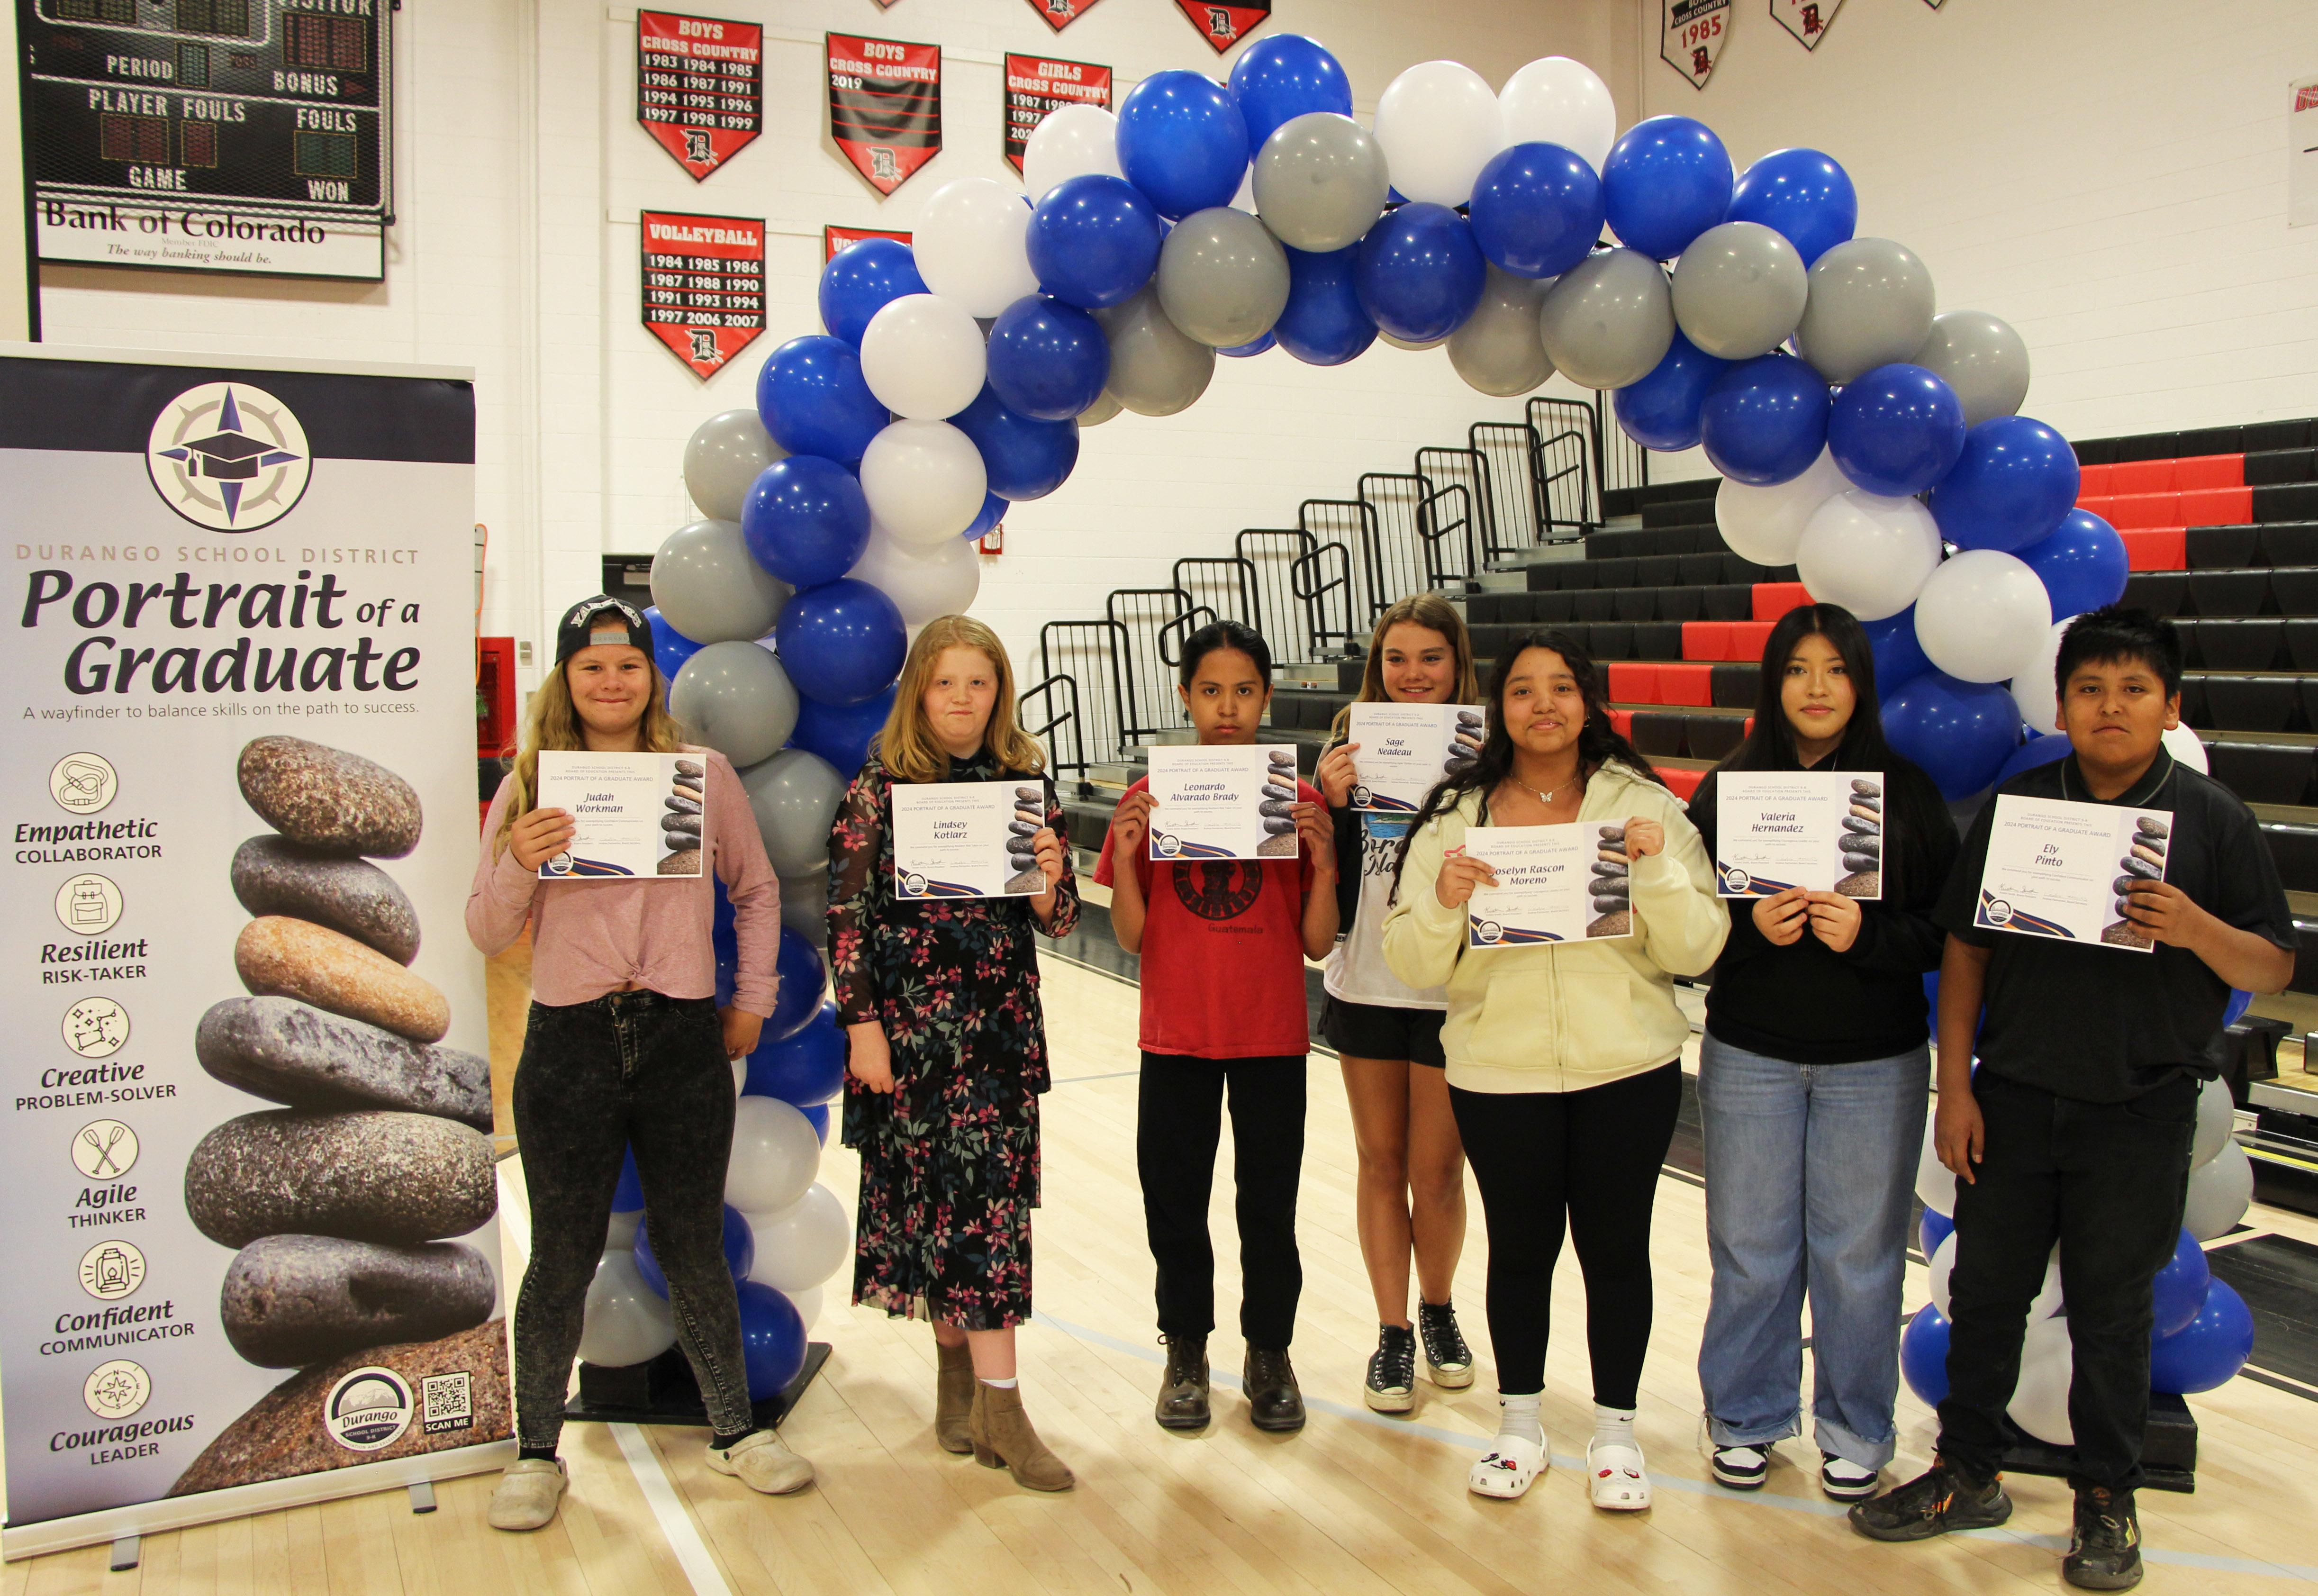 MIller Middle School Student Award recipients